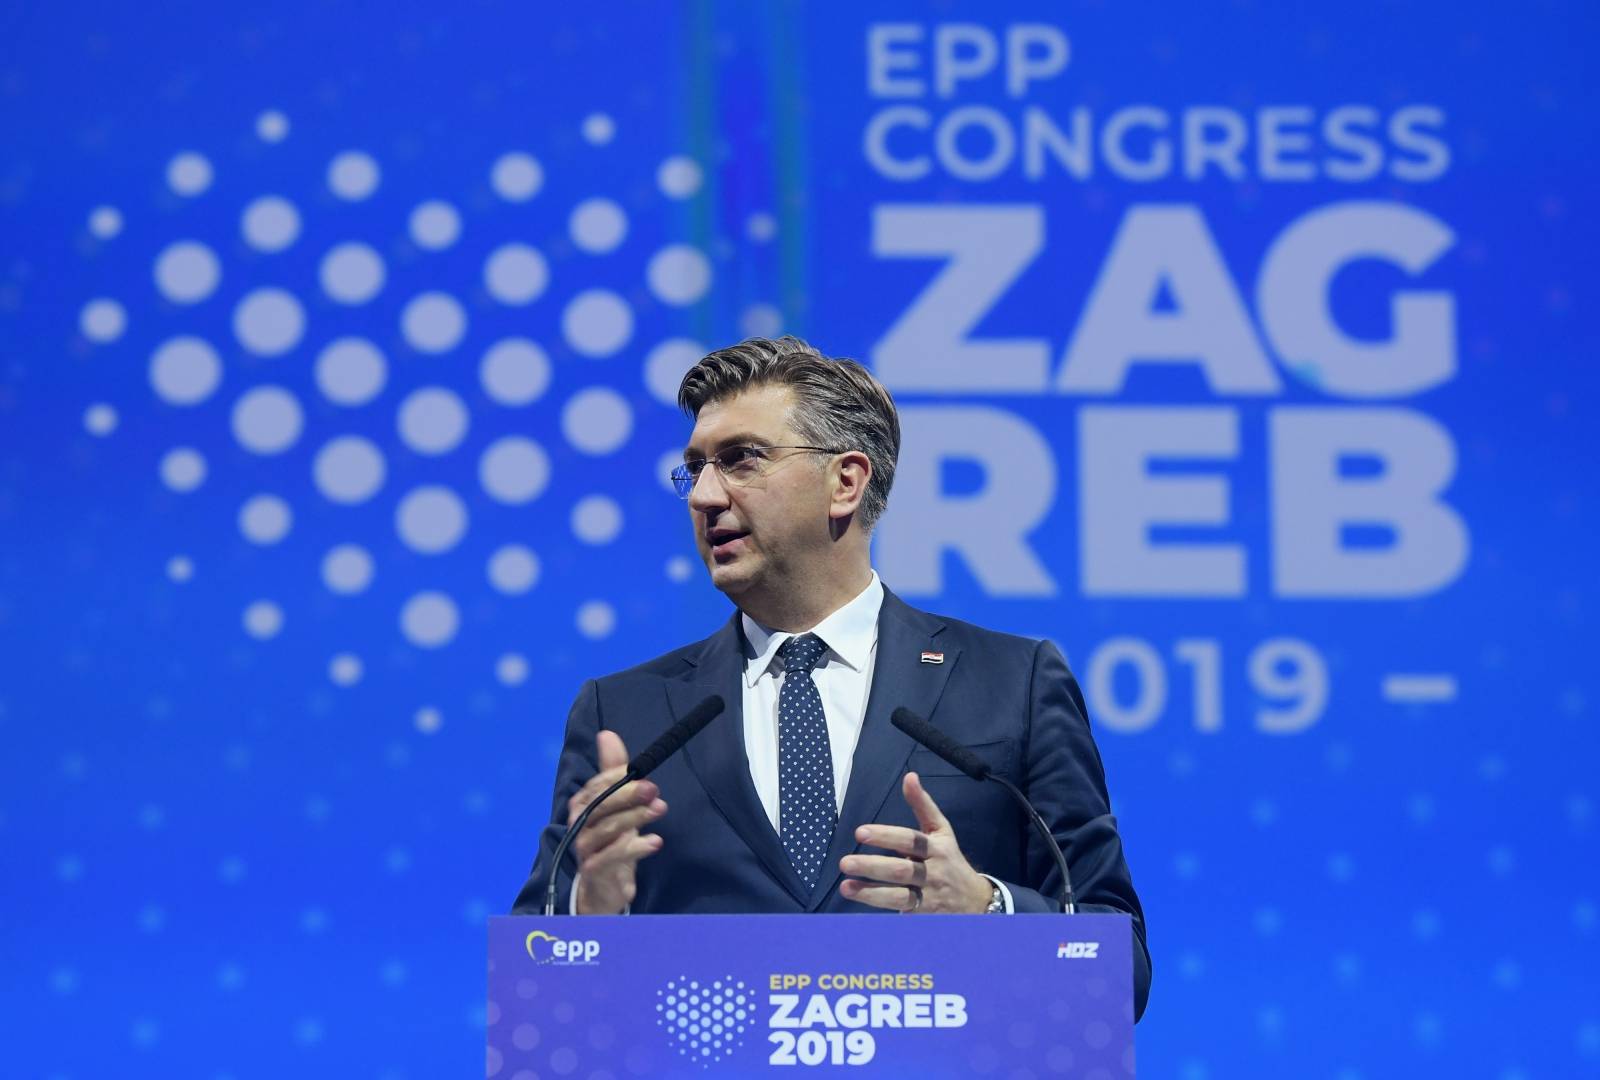 Zagreb: Drugi dan 24. izbornog kongresa Europske pučke stranke